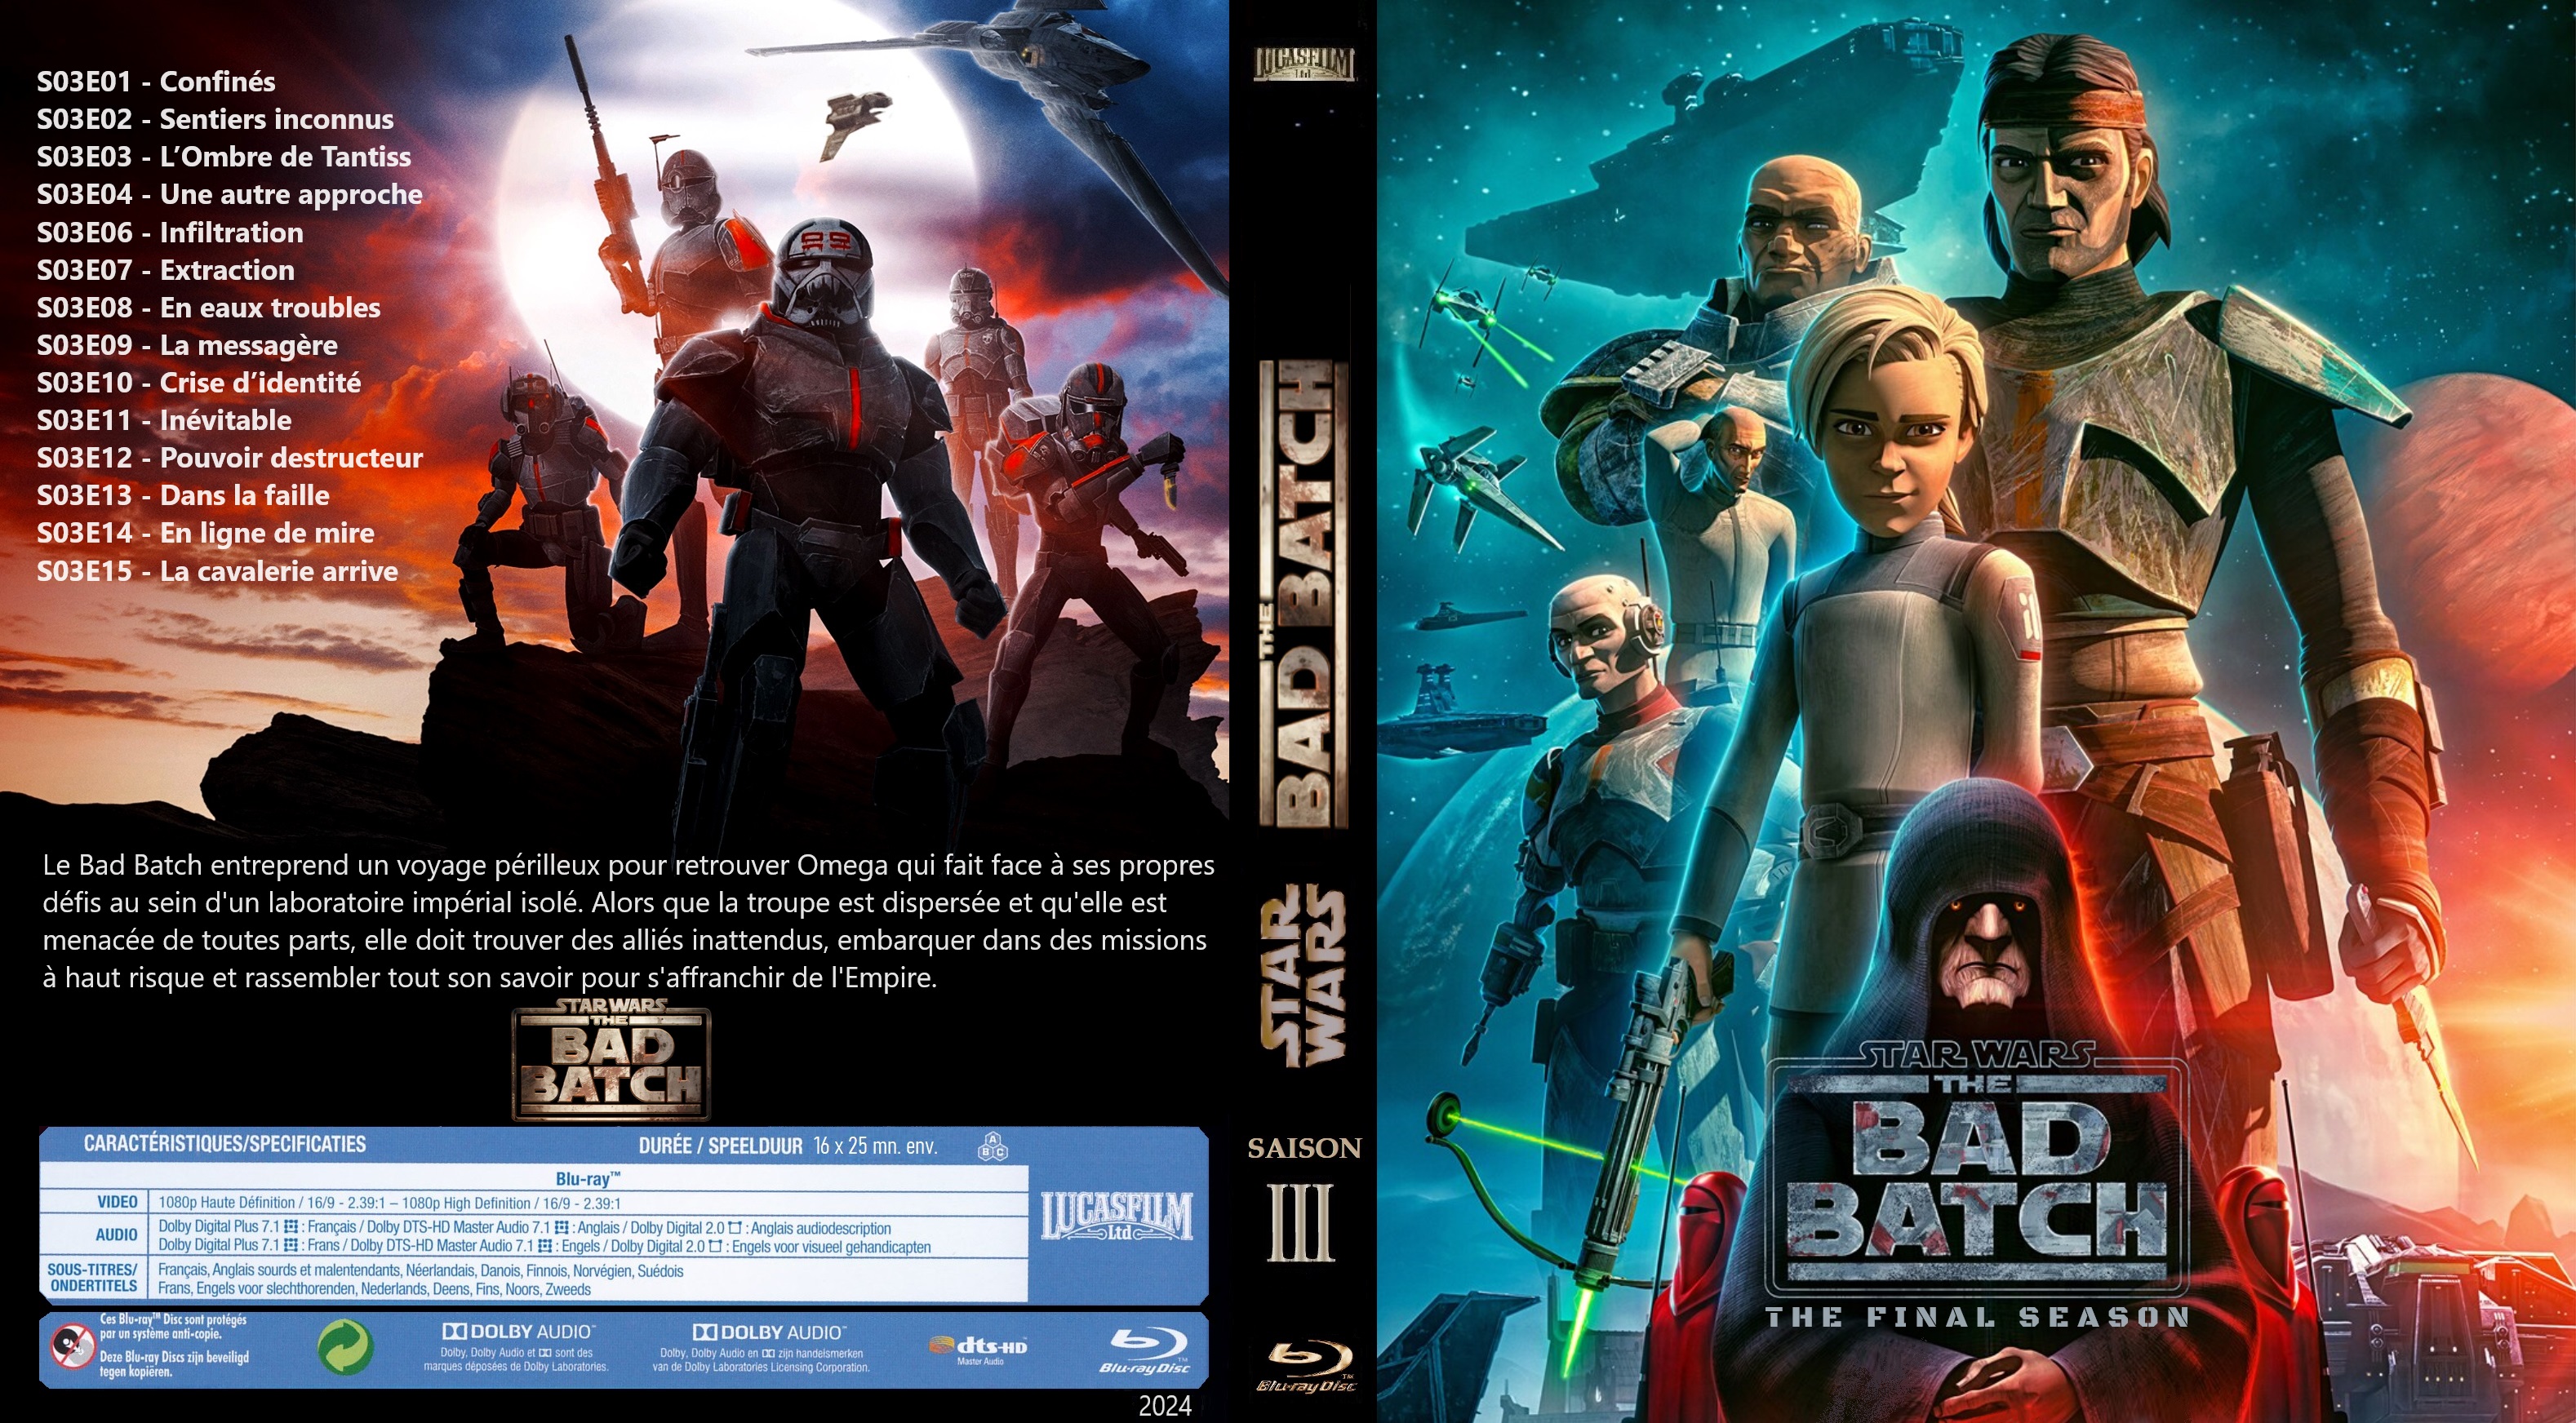 Jaquette DVD Star Wars The Bad Batch Saison 3 custom (BLU-RAY)